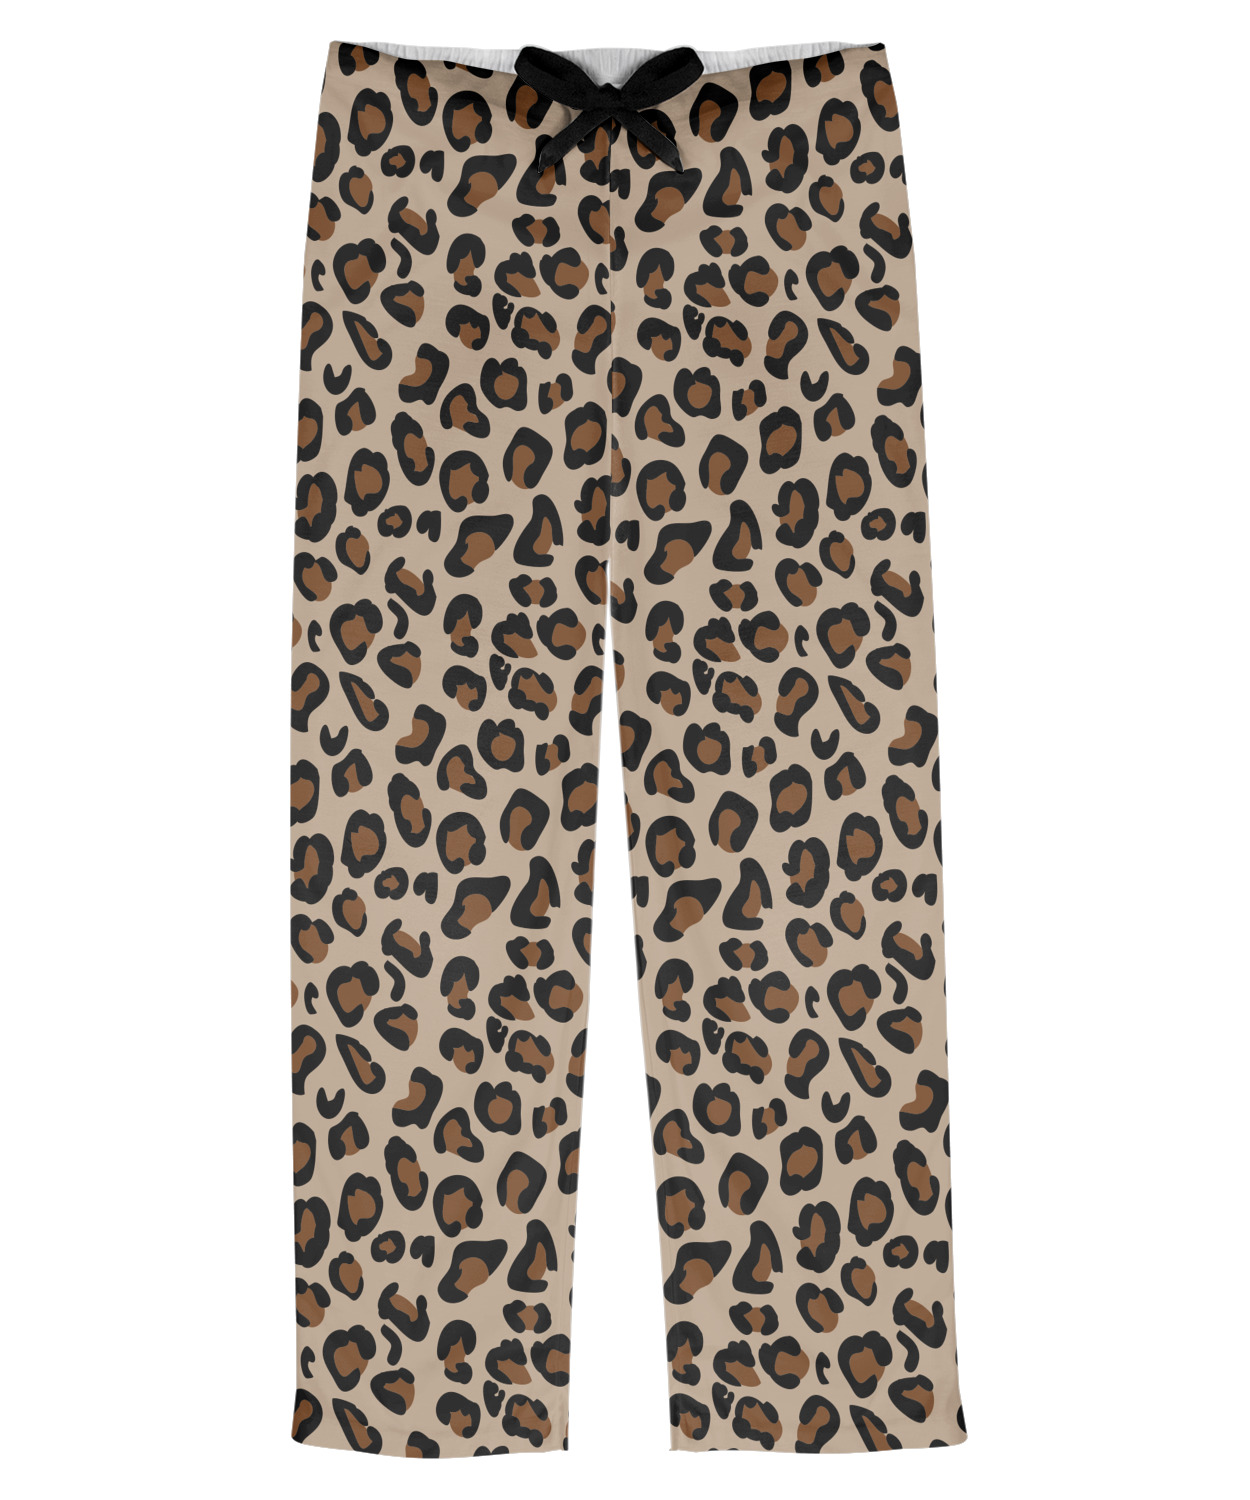 Granite Leopard Mens Pajama Pants - L (Personalized) - YouCustomizeIt